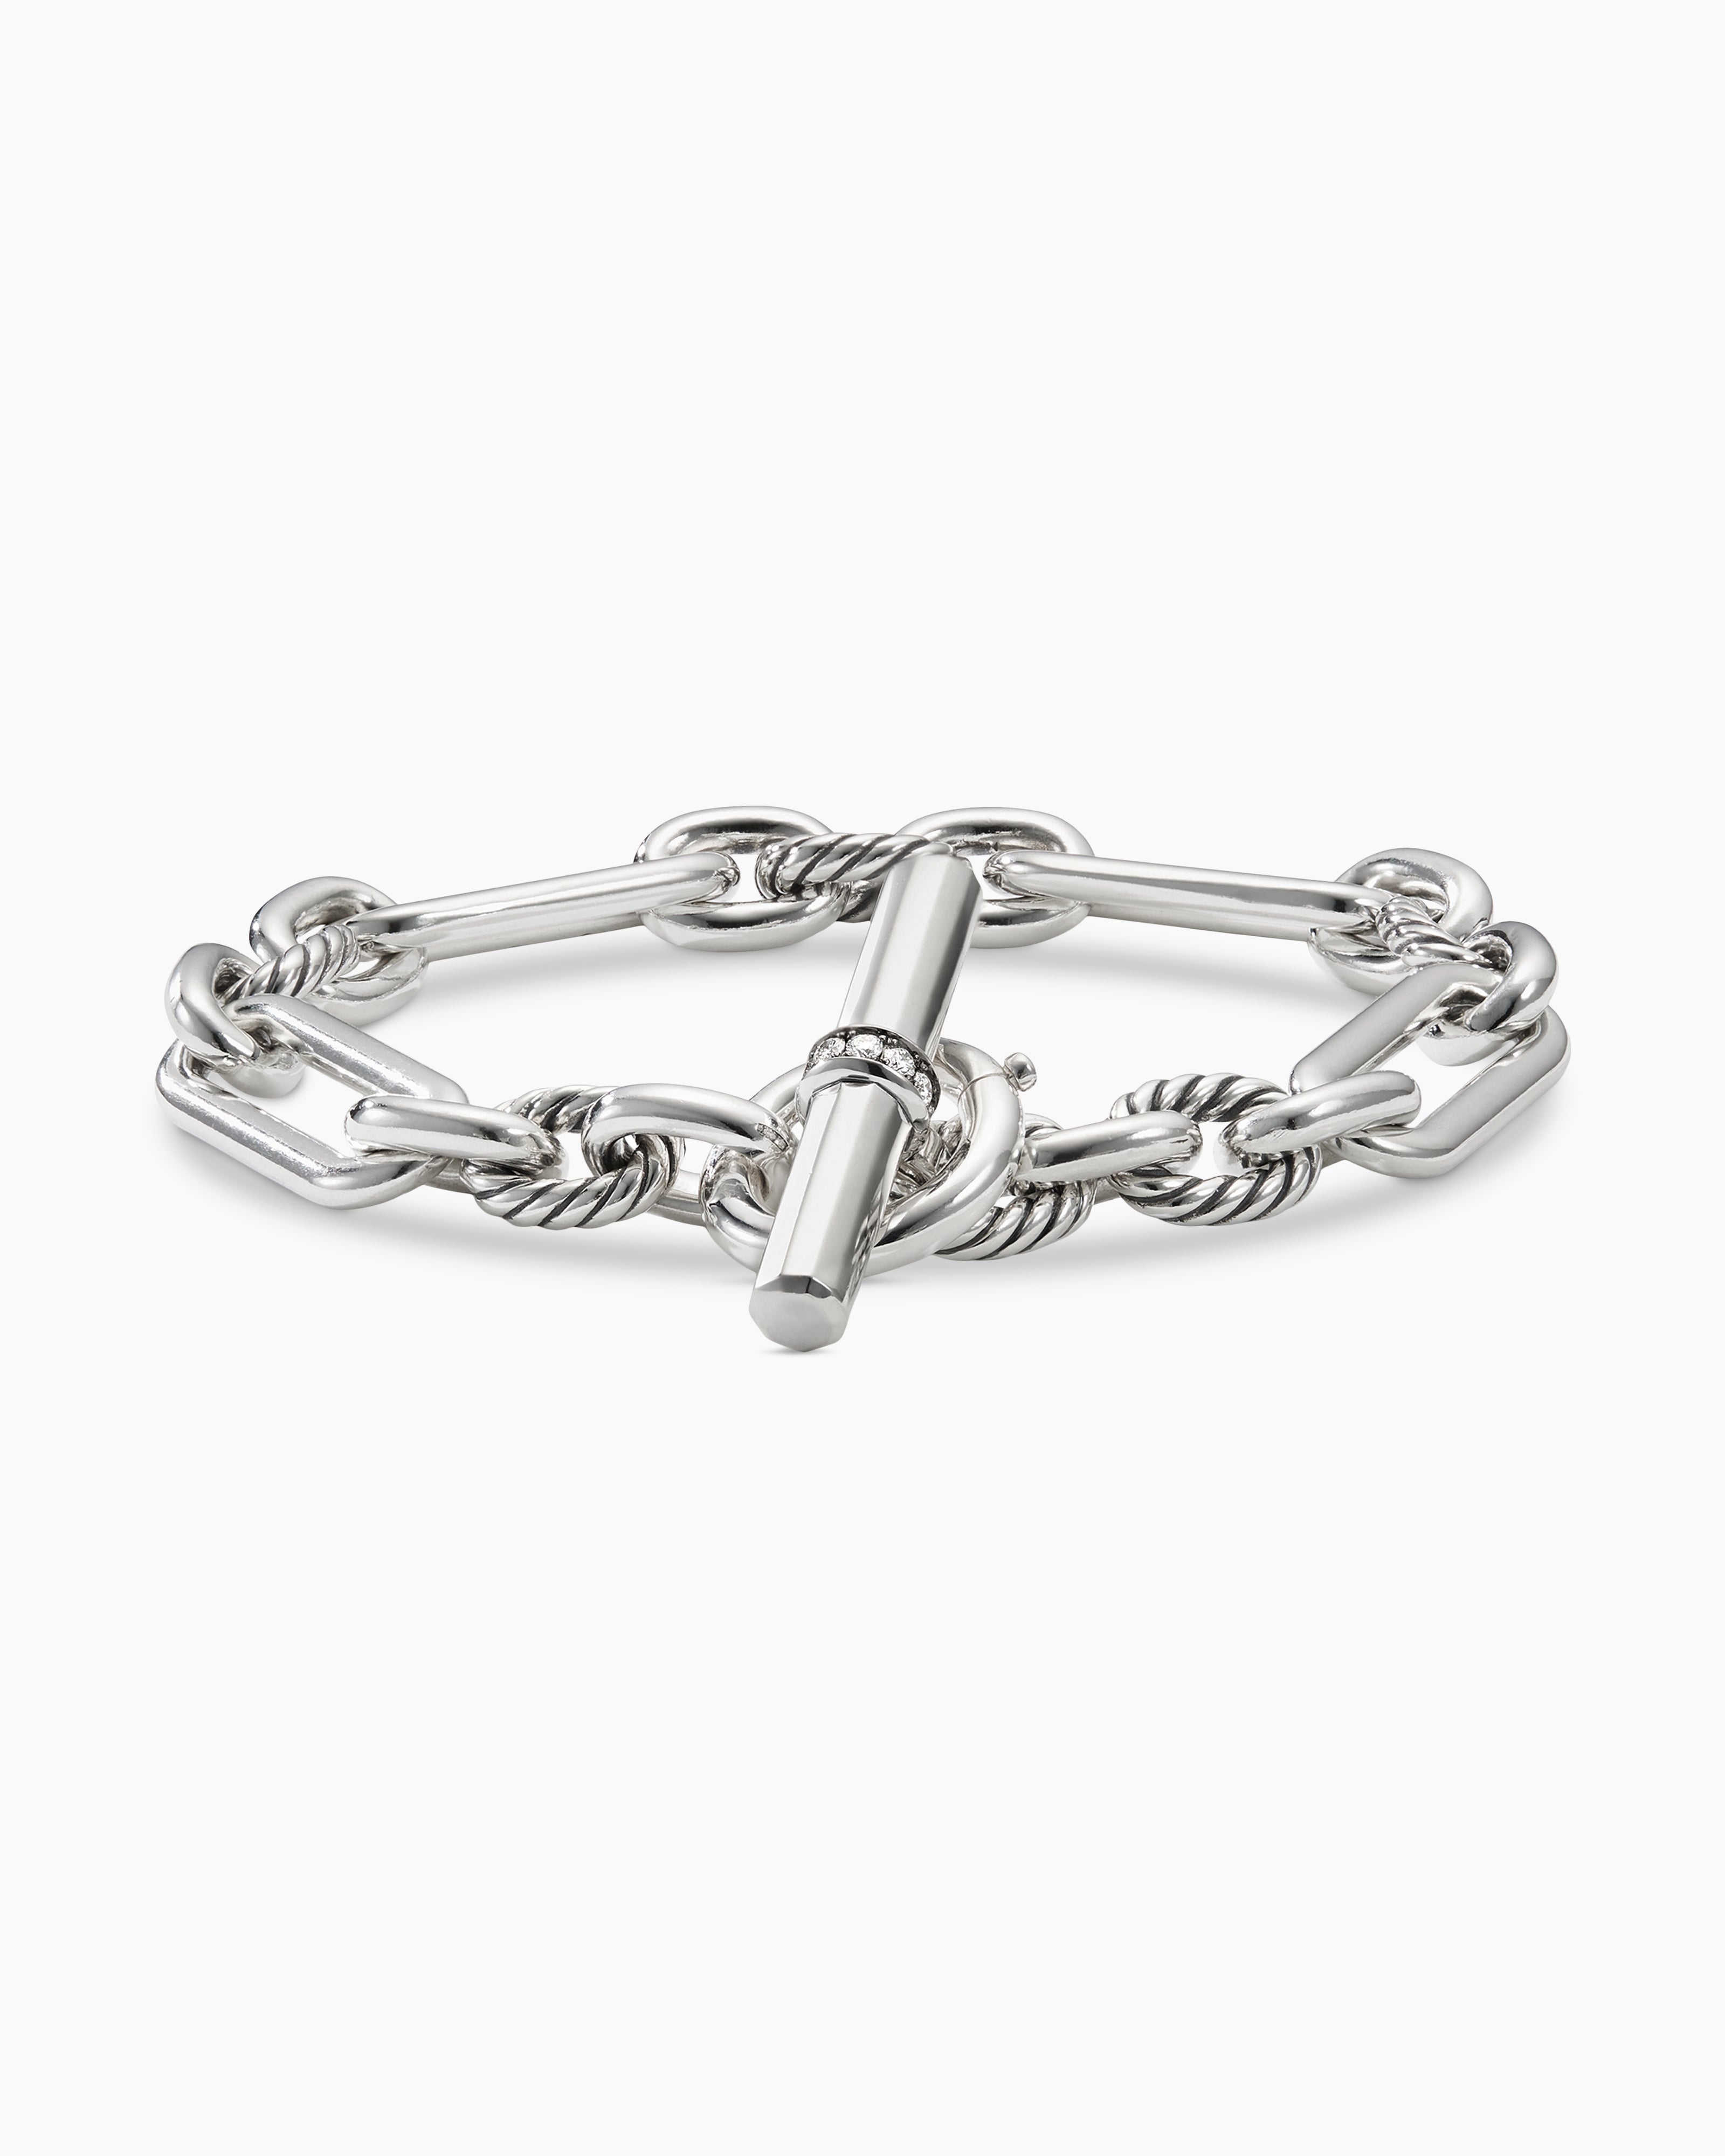 Shop Women's Chain Bracelets | David Yurman Canada